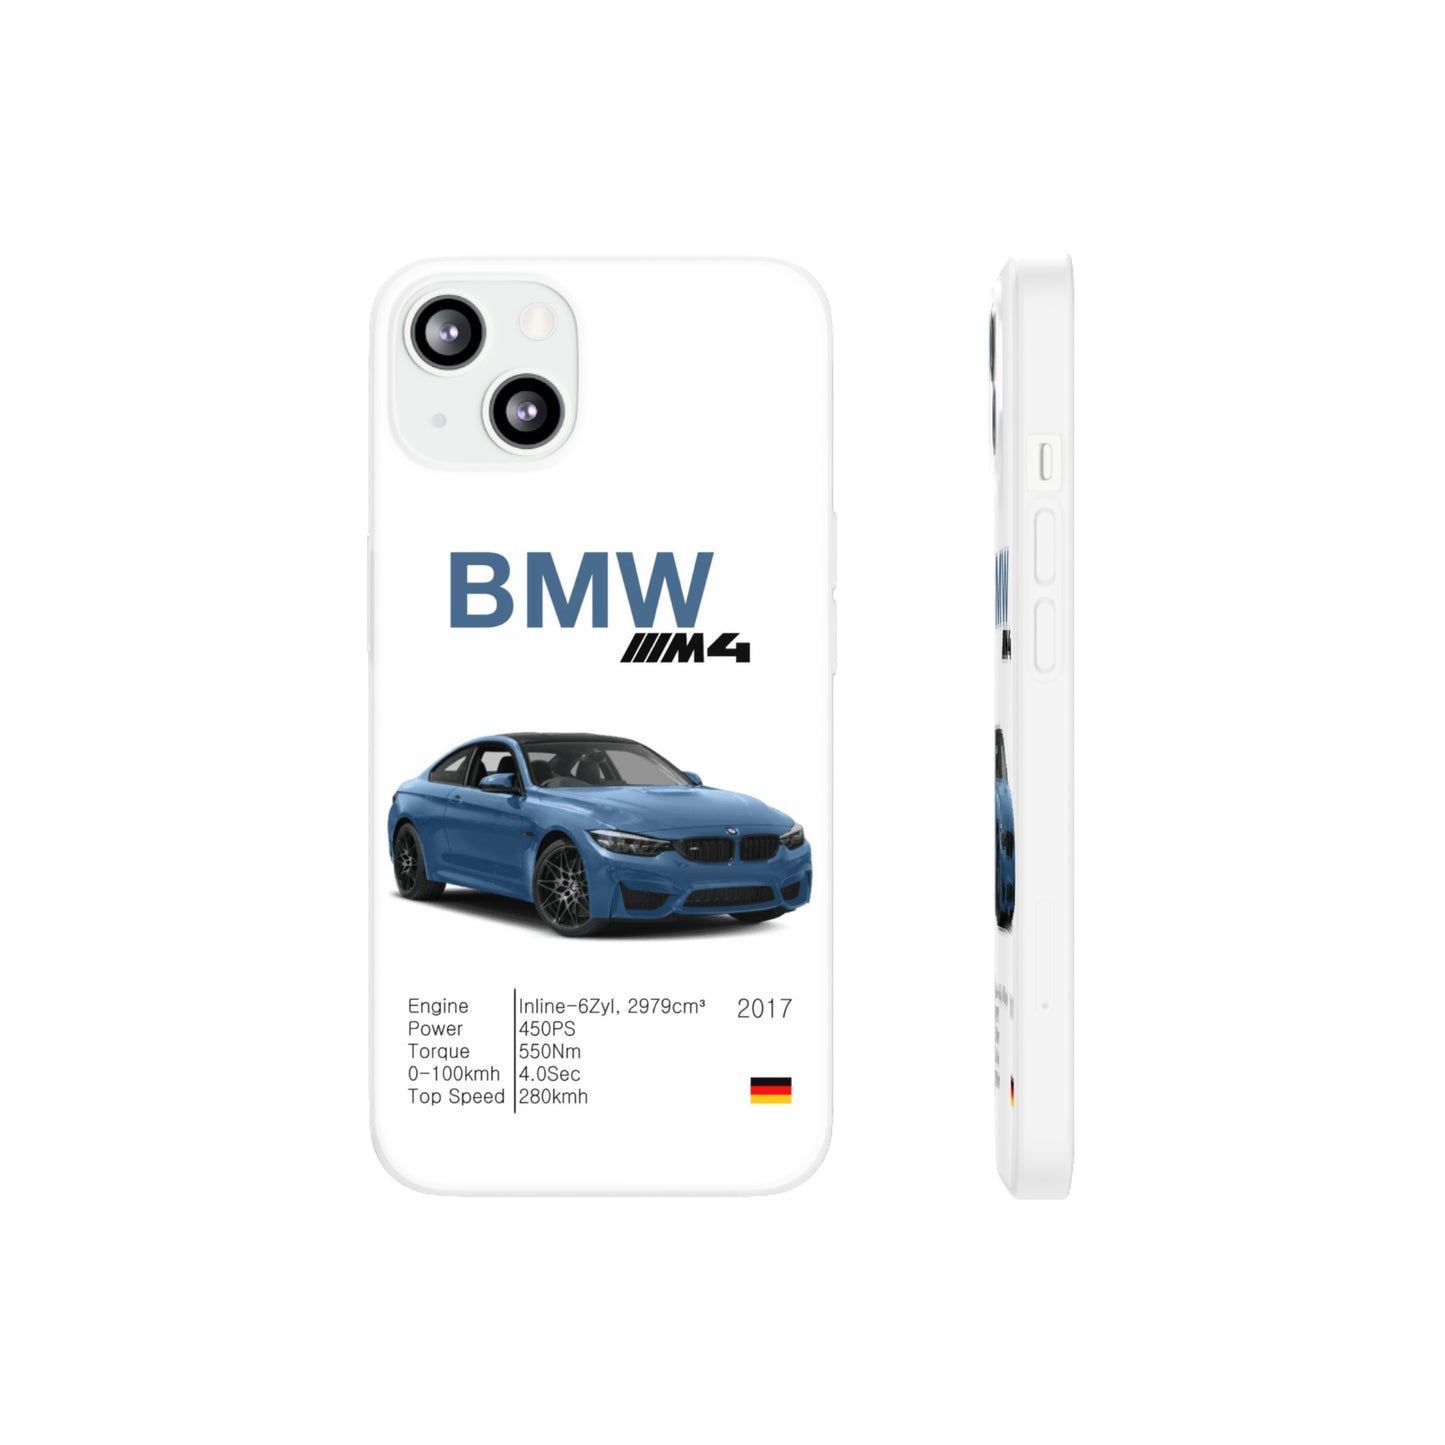 BMW M4 Phone Case